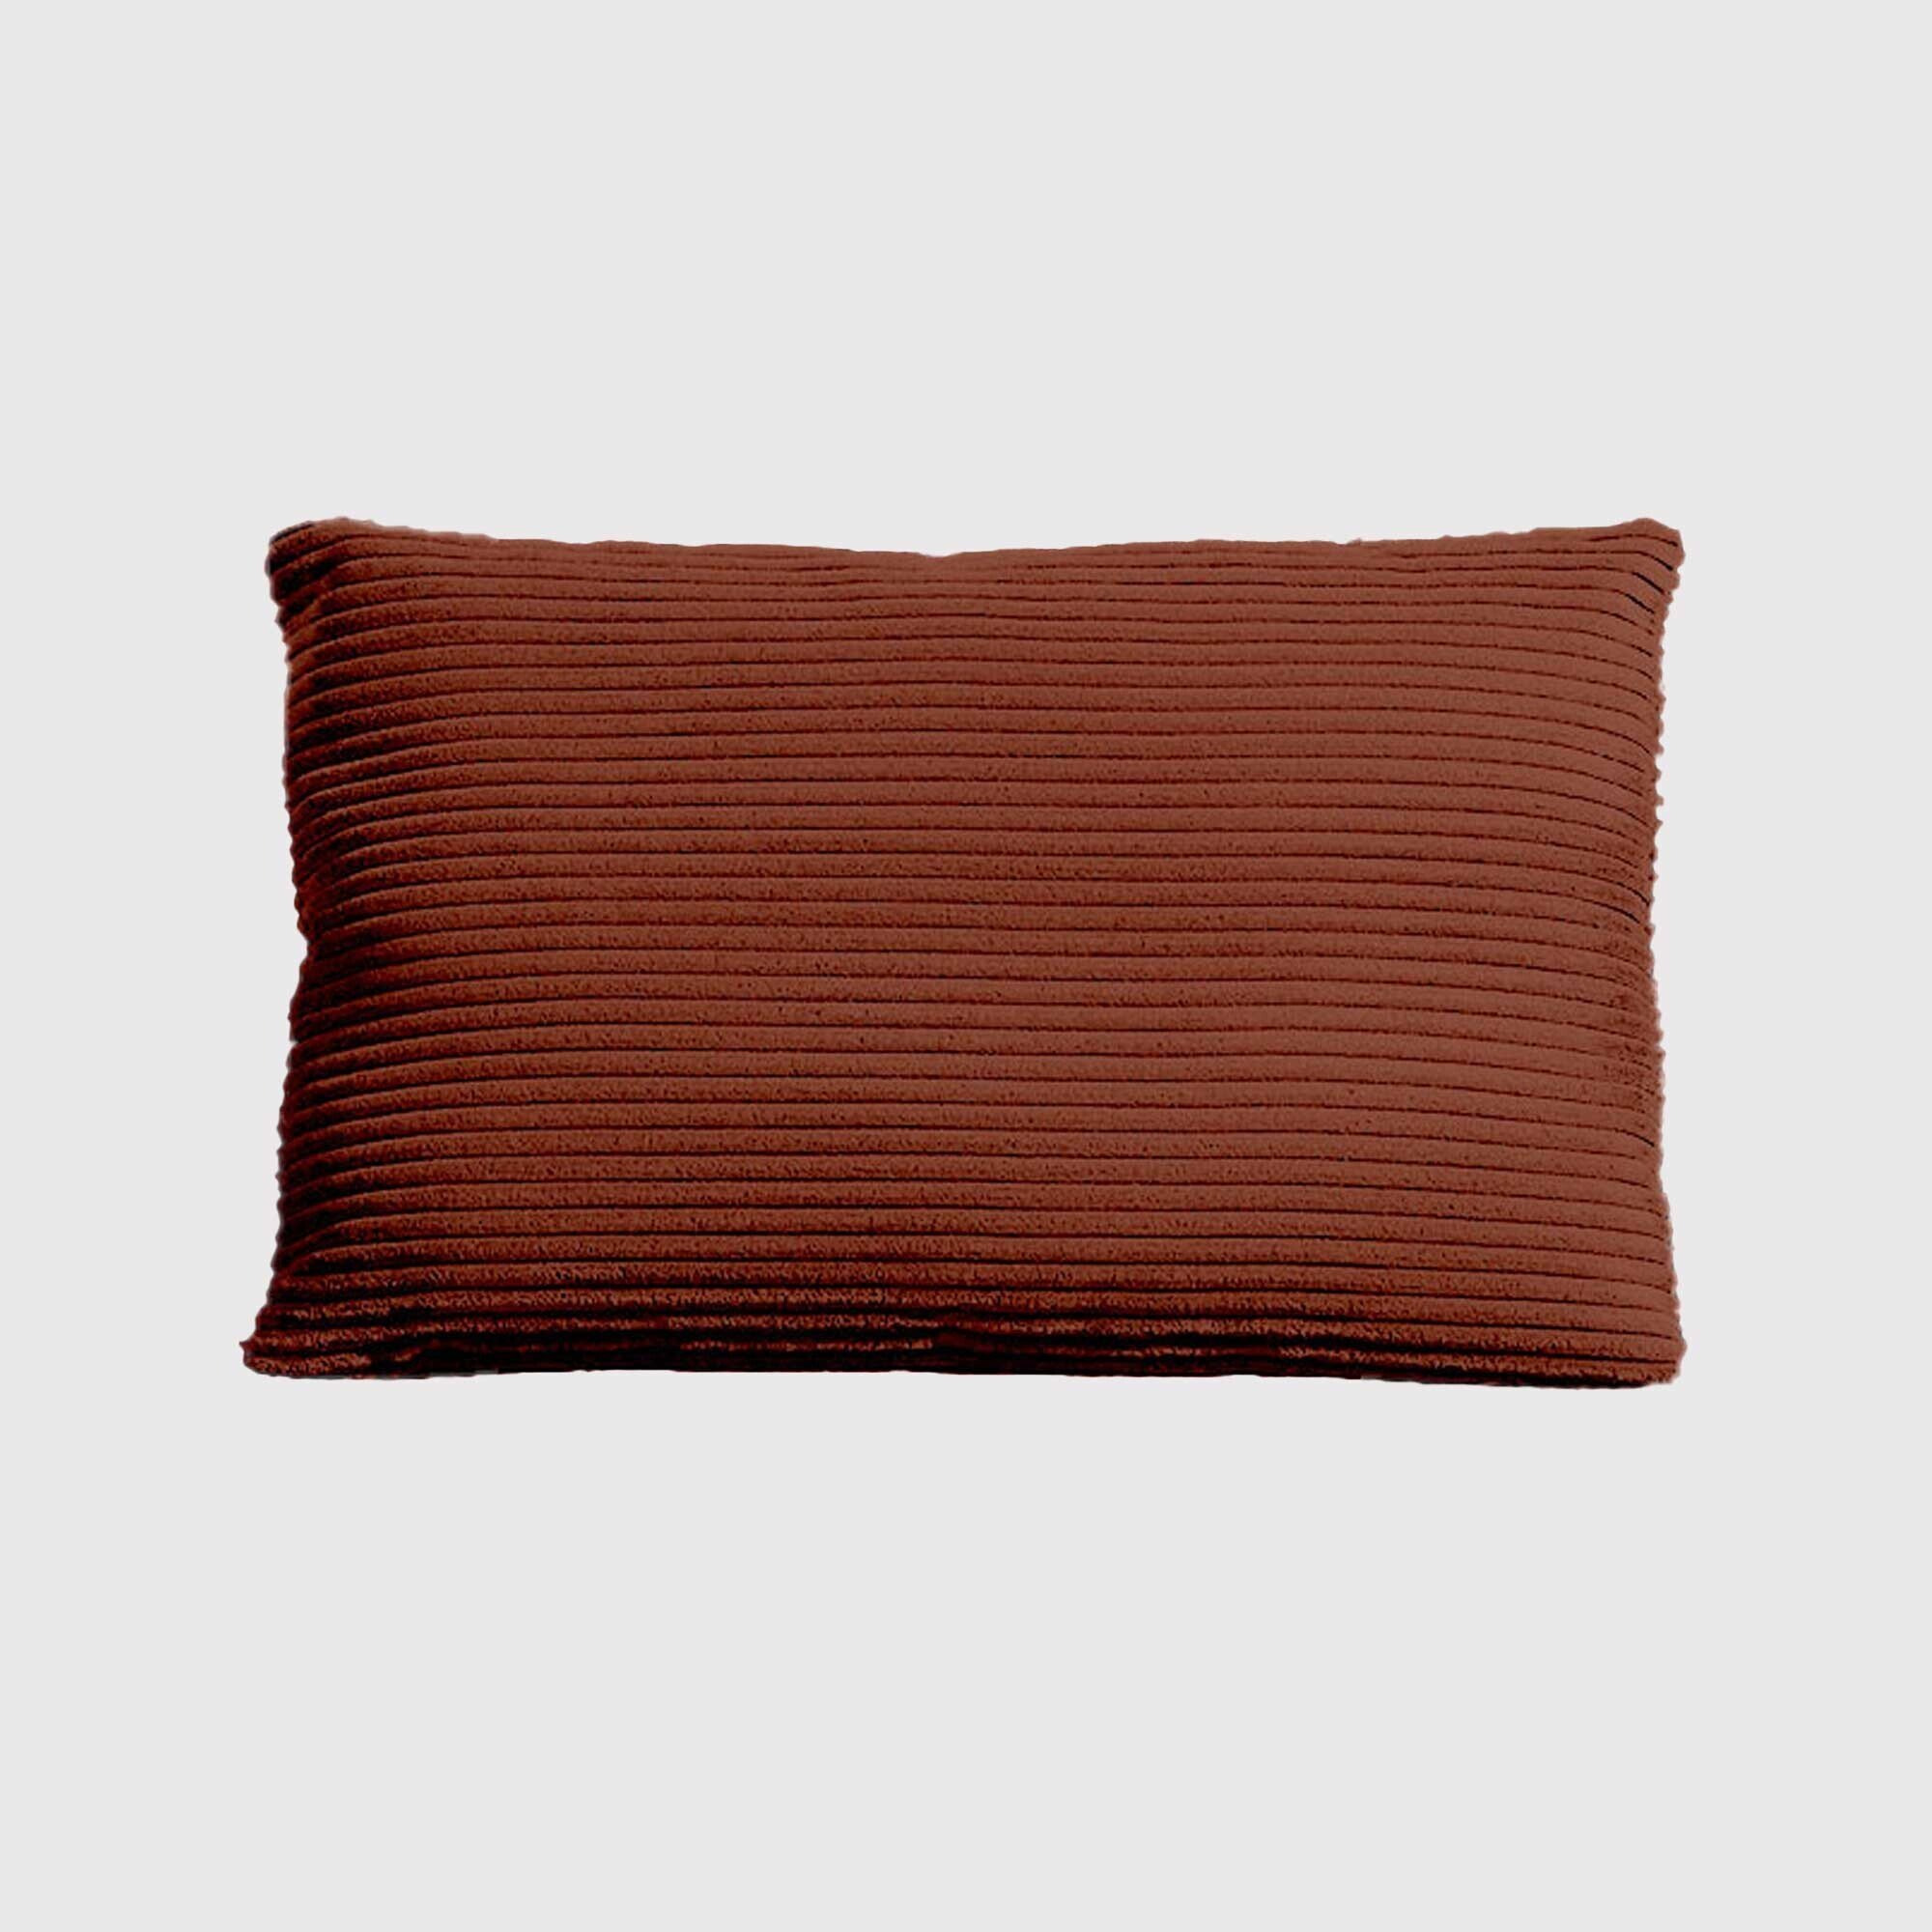 Twain Medium Rectangular Cushion 60x40cm - Barker & Stonehouse - image 1